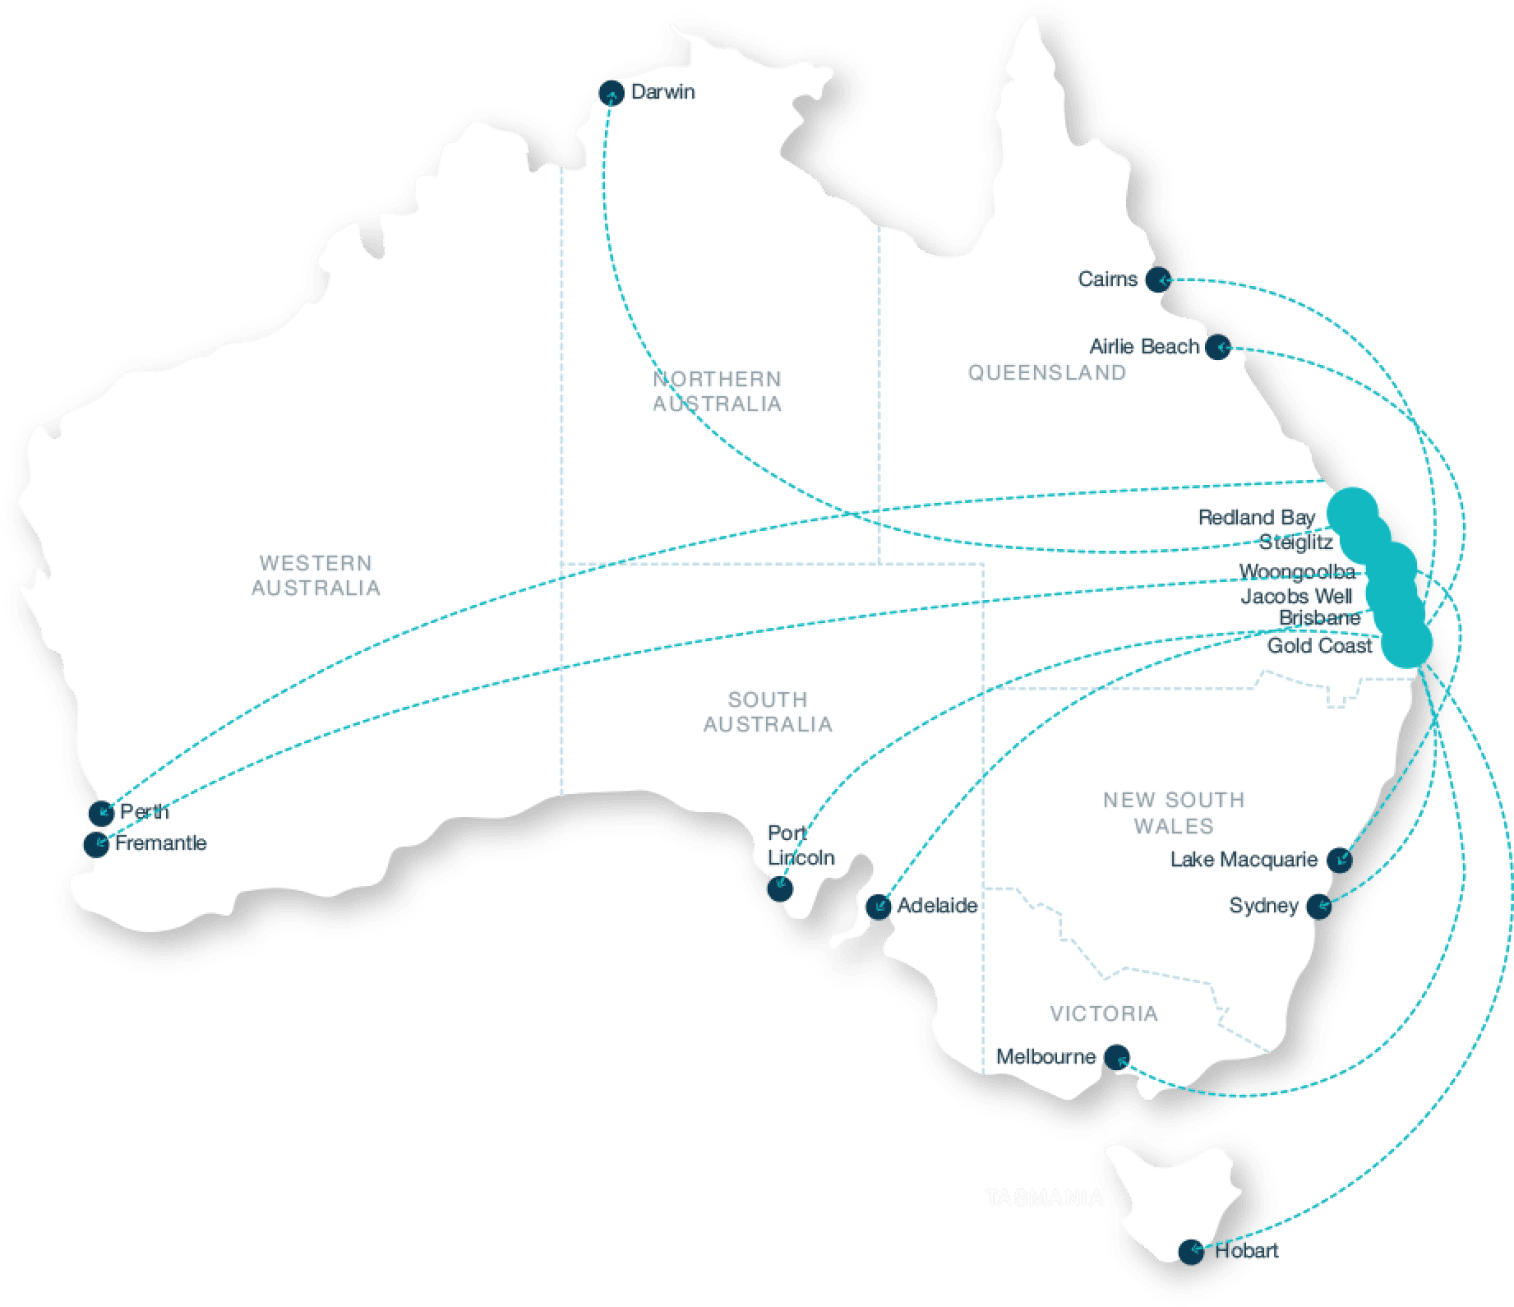 yacht transport services australia